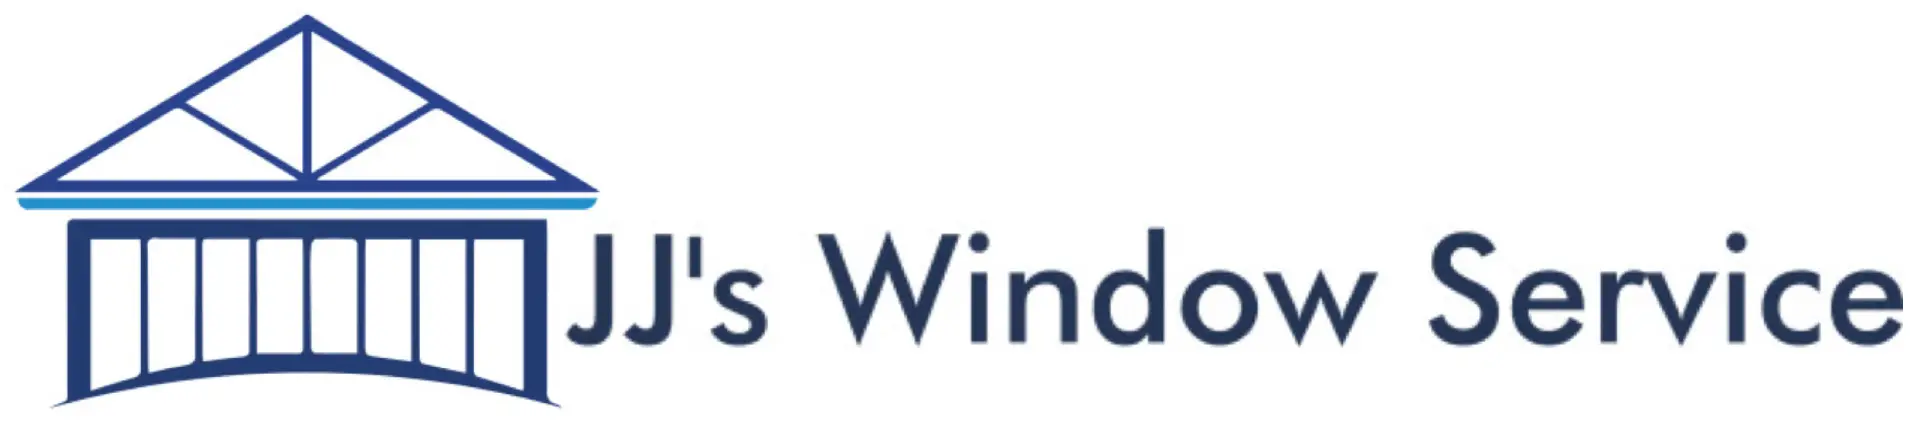 Company logo of JJ's Window Service